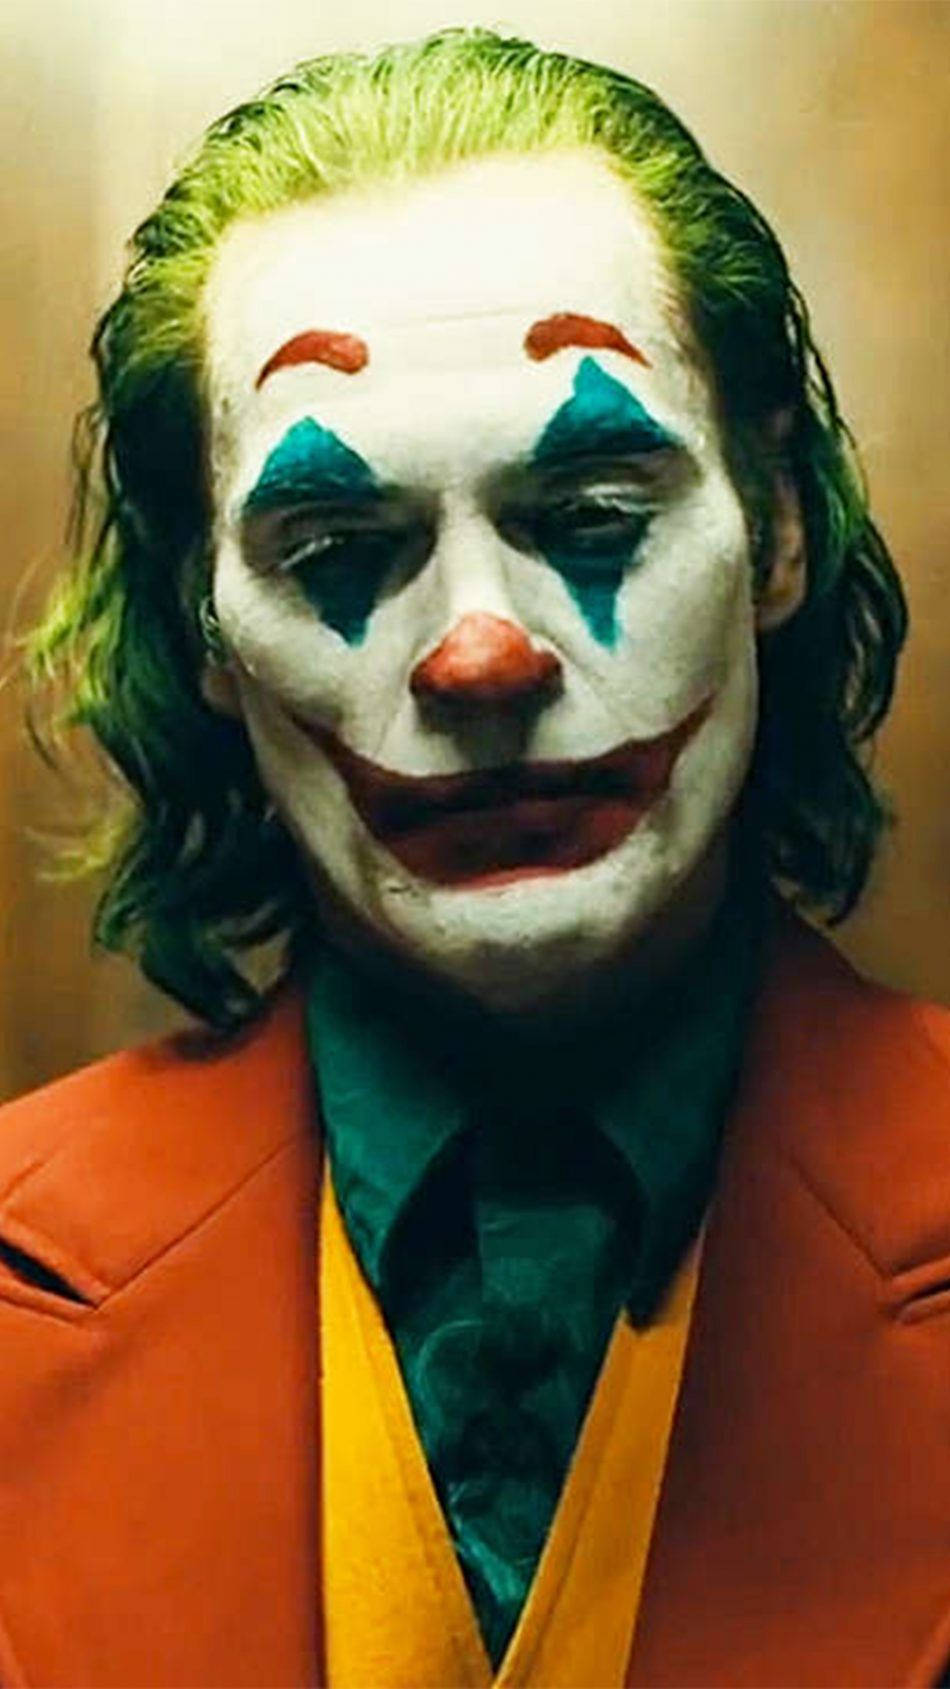 Joker2019 Joaquin Phoenix Can Be Translated To German As 